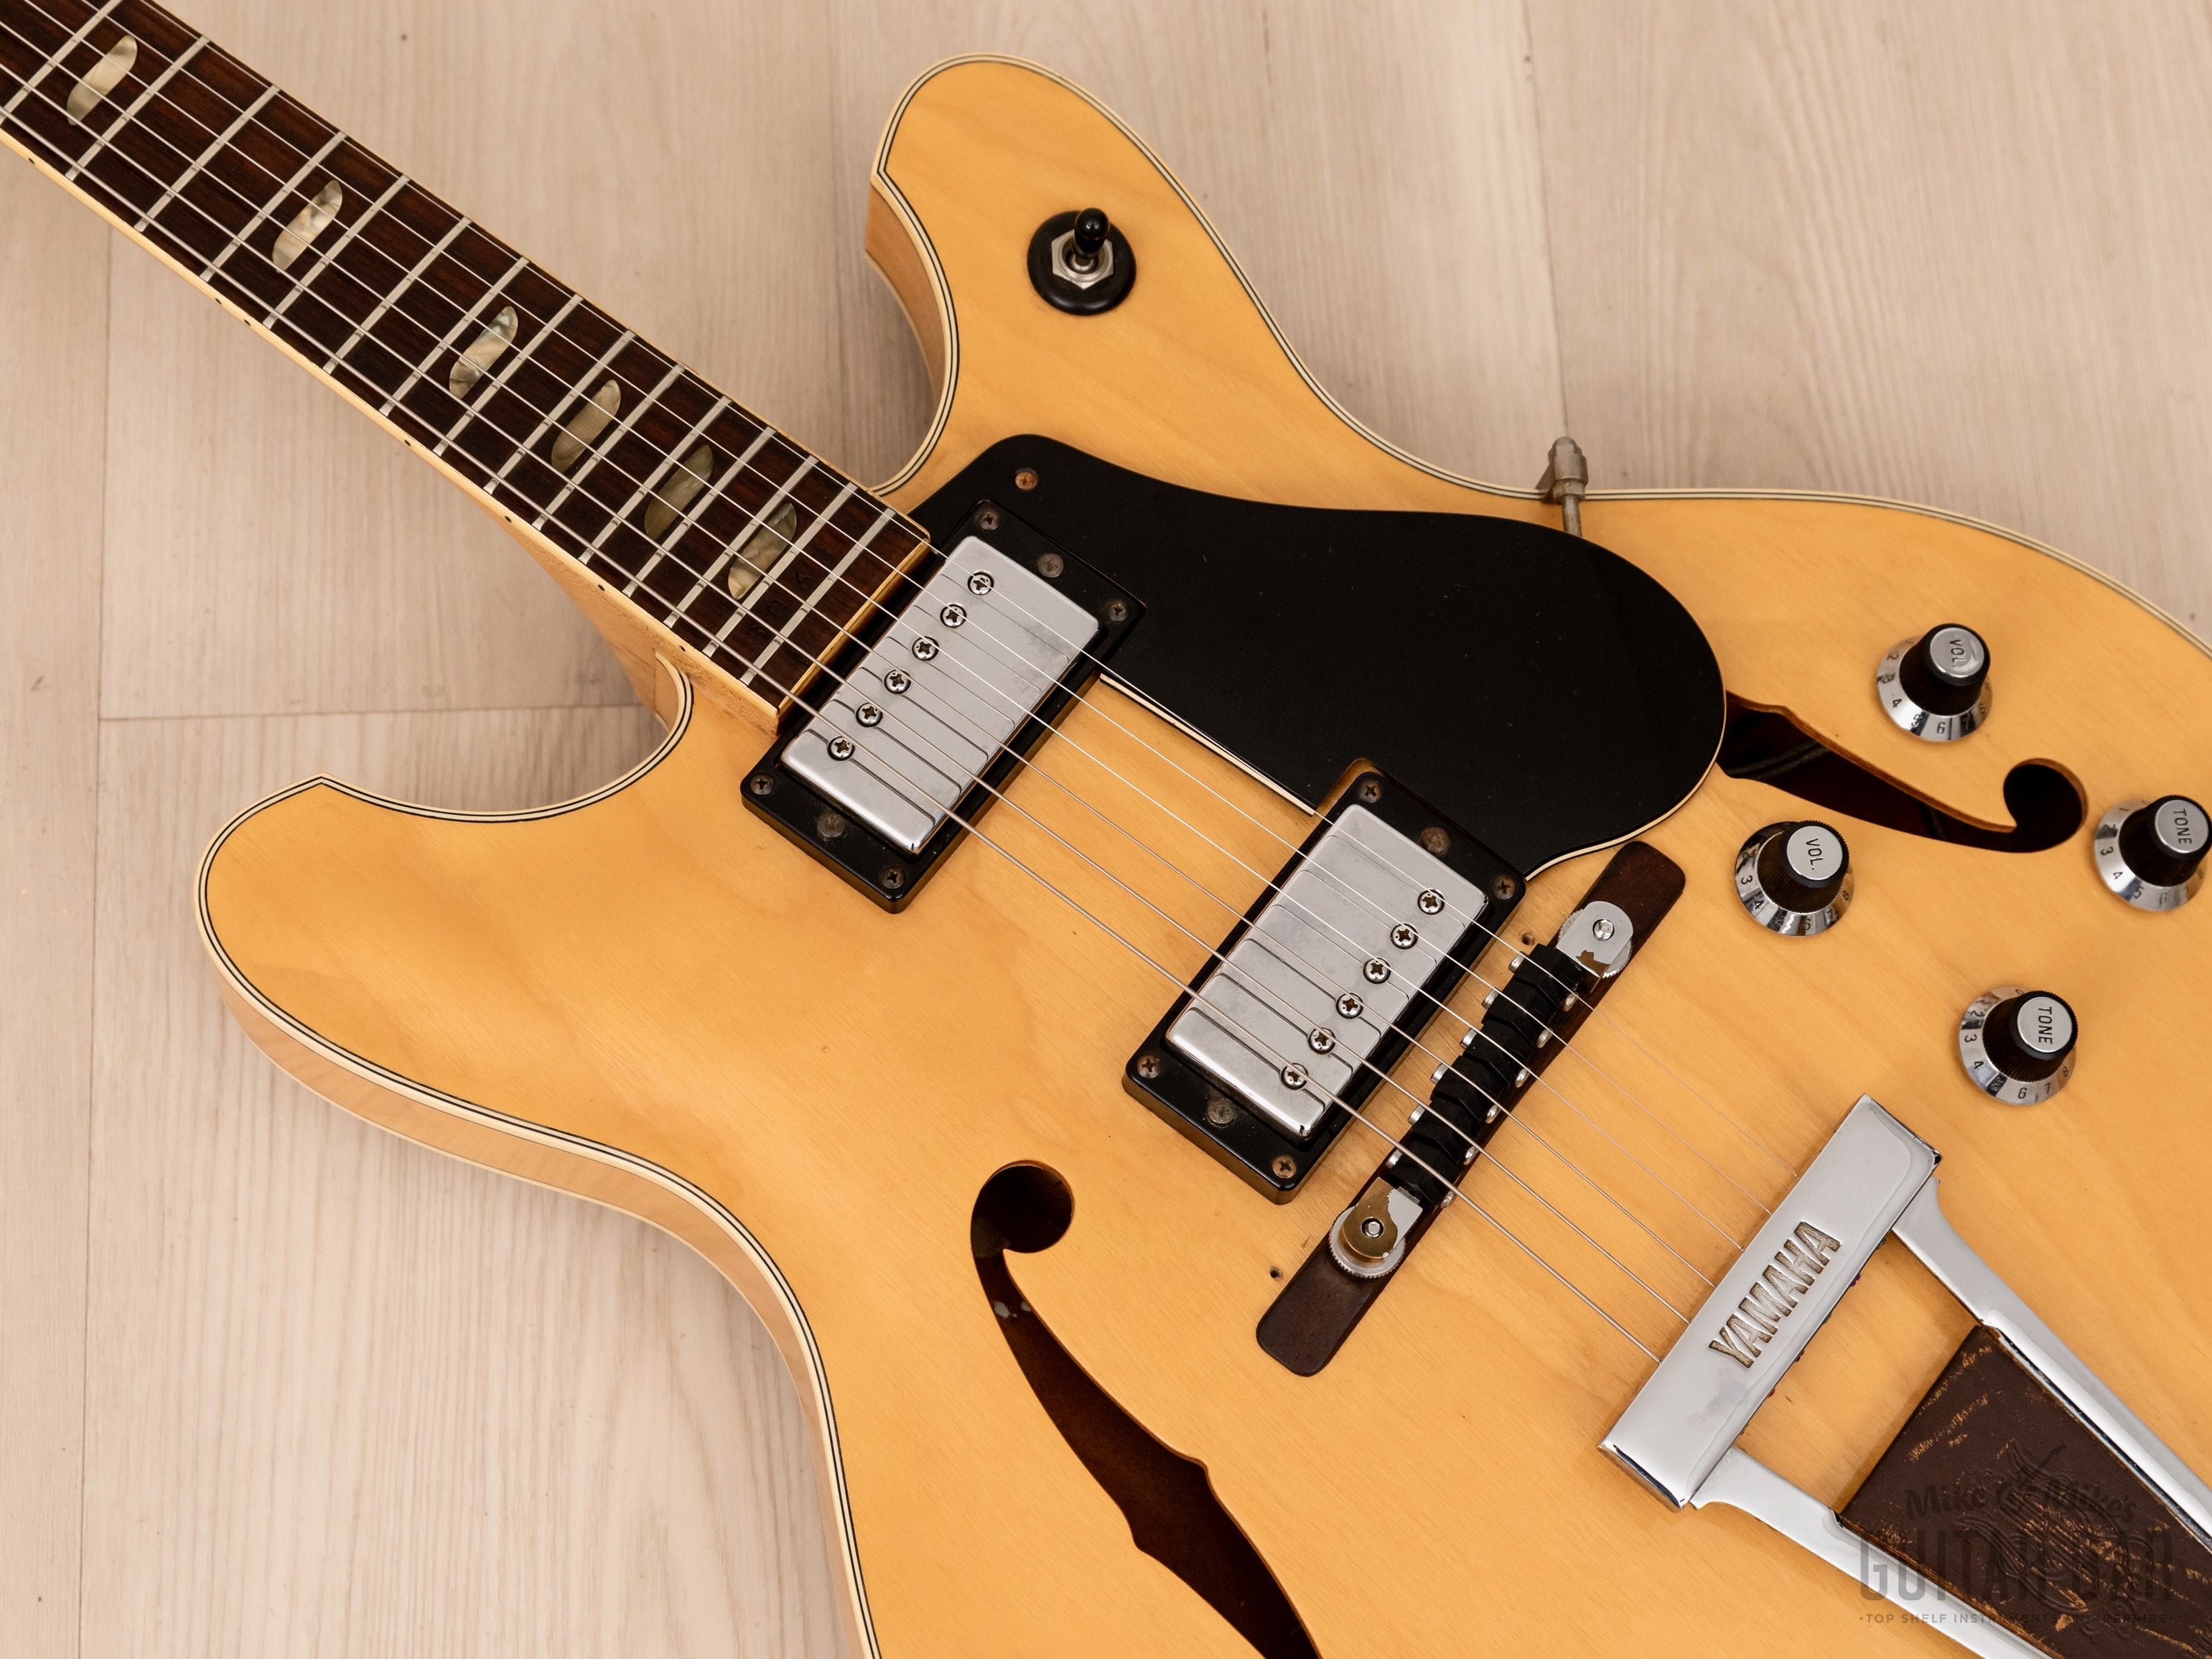 1974 Yamaha SA-60 Super Axe Vintage Semi-Hollow Electric Guitar Natural w/ Case, Hangtag